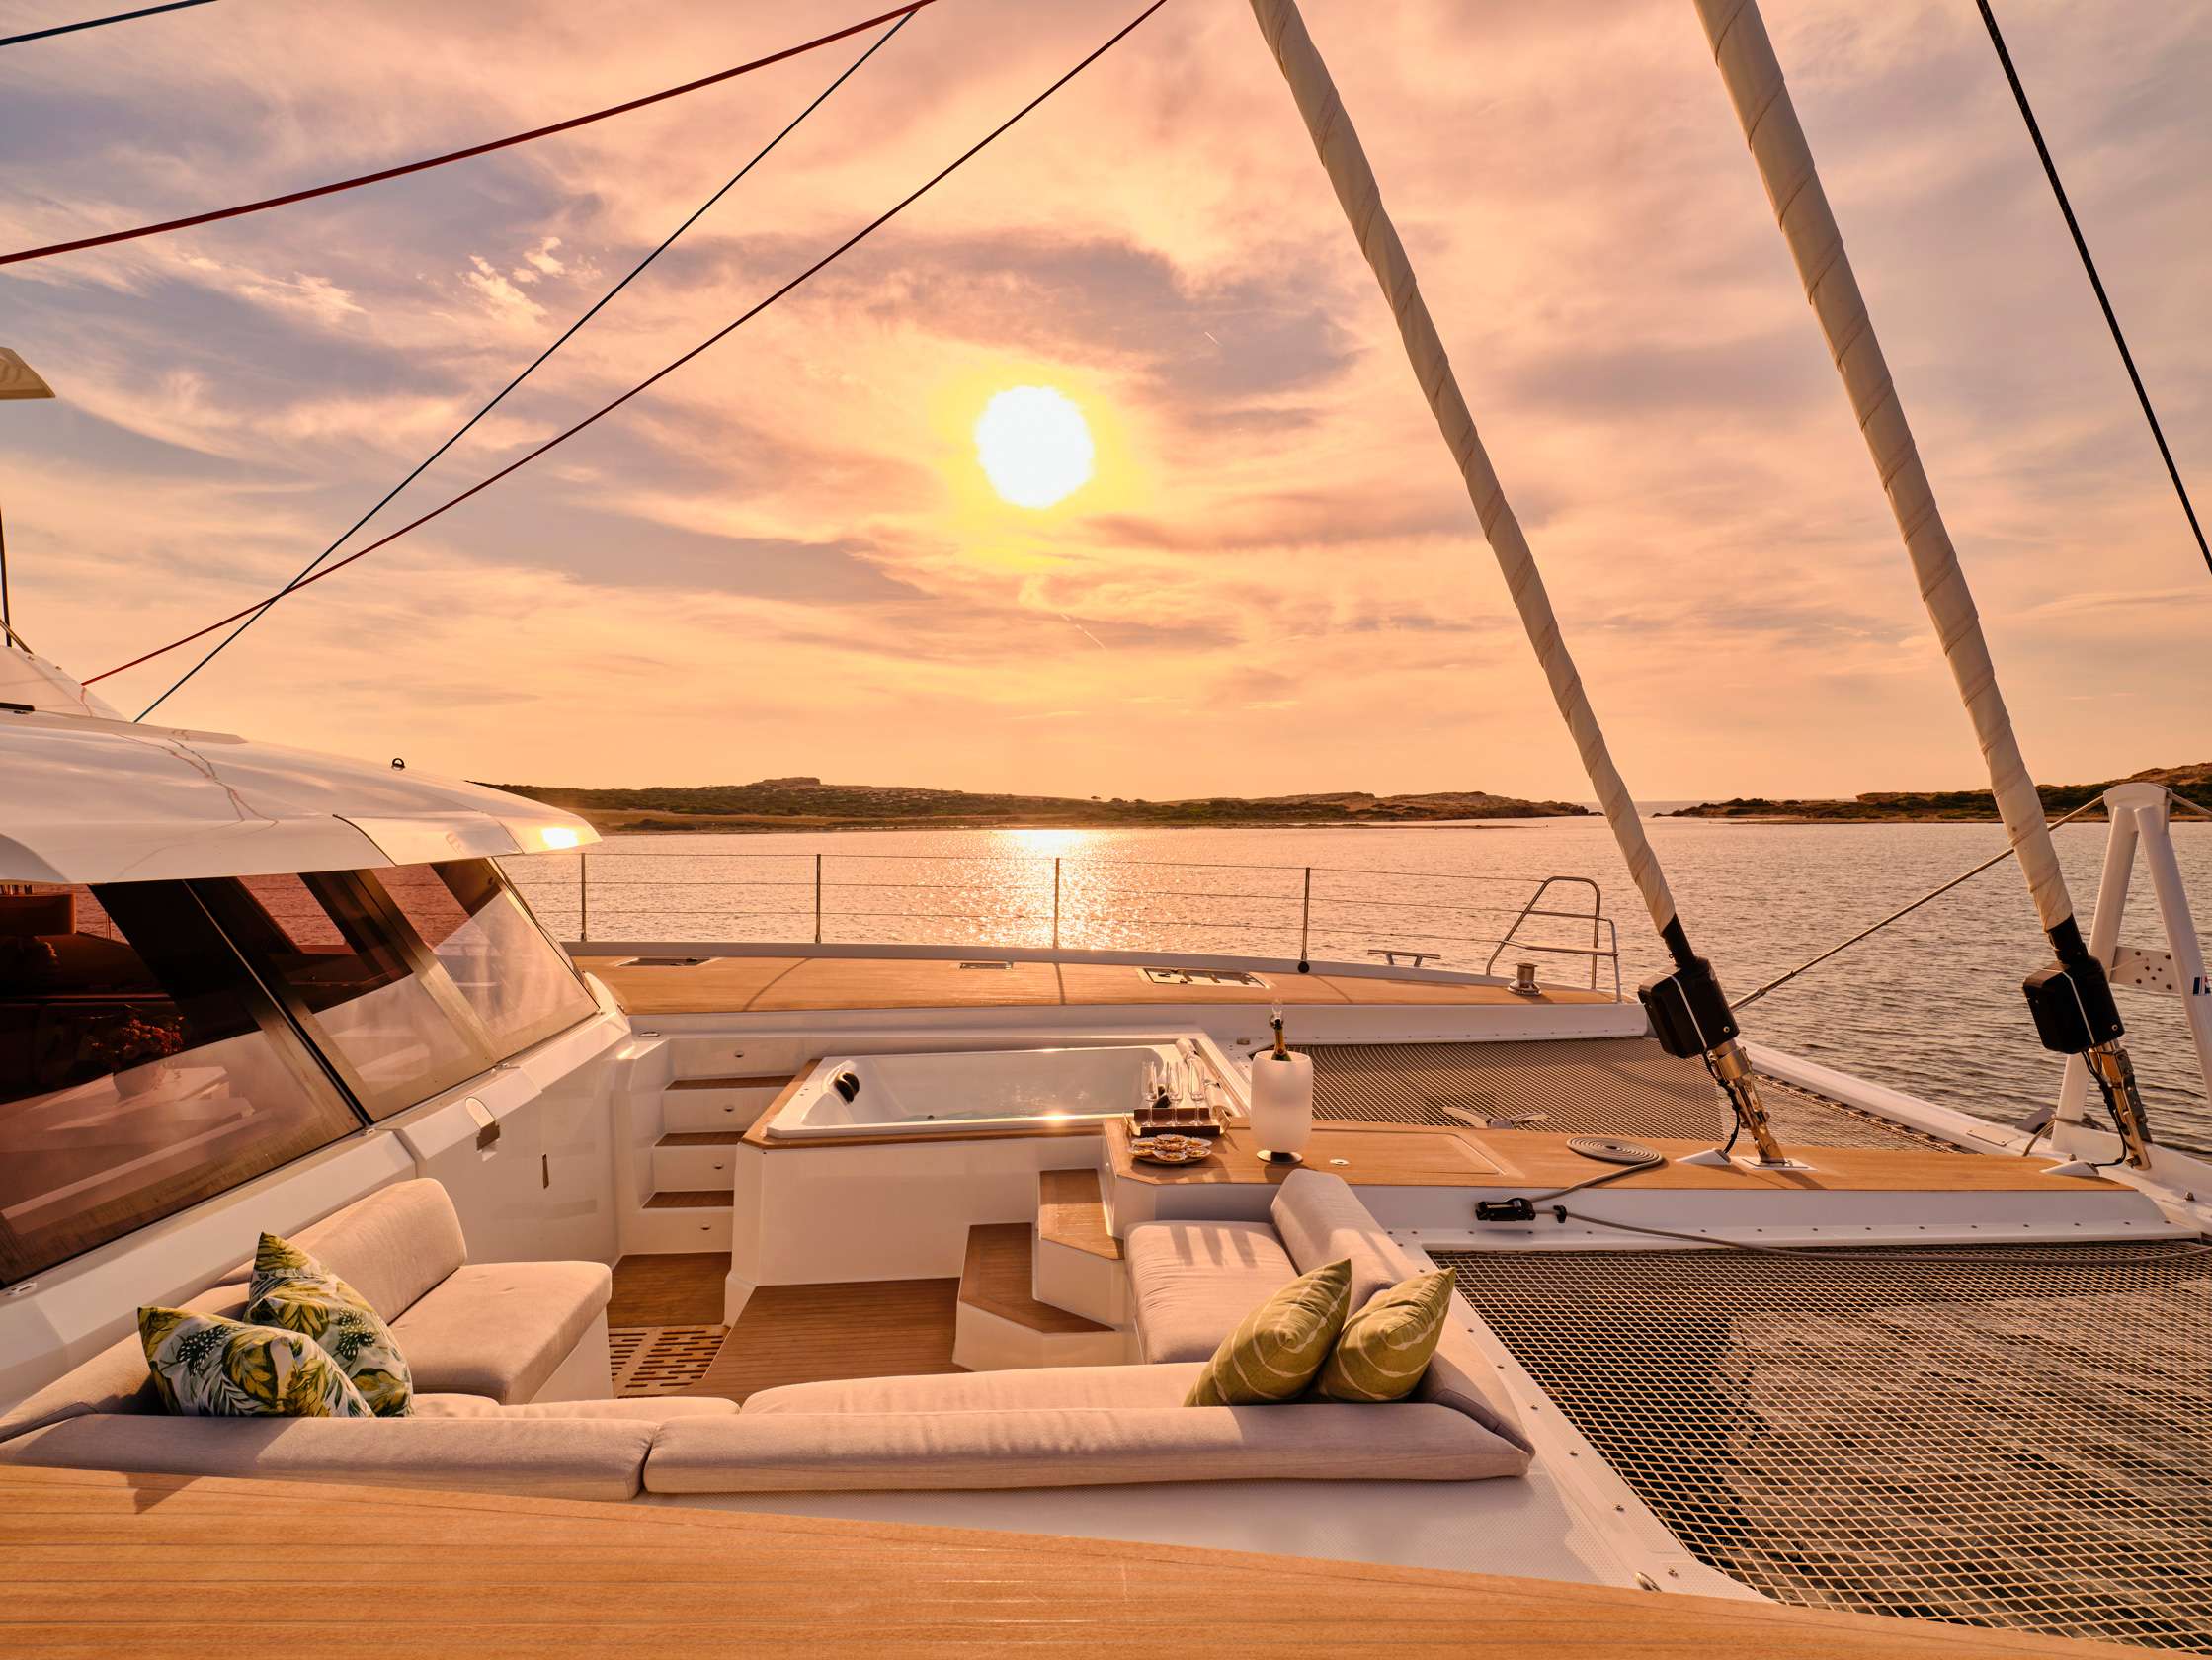 PIXIE Yacht Charter - sundowner time